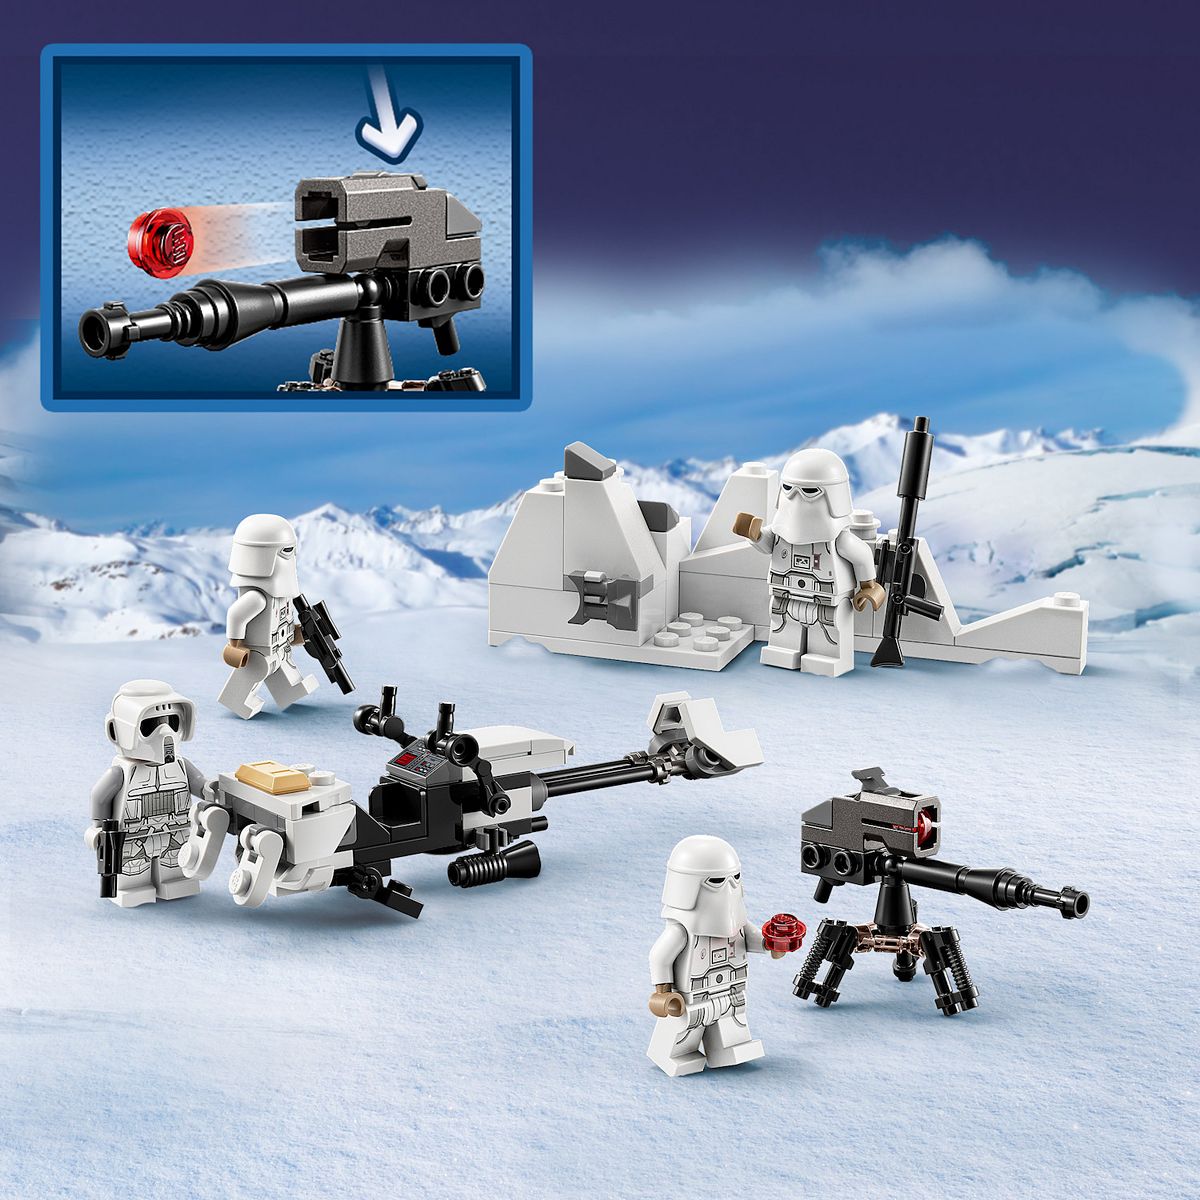 TESB Imperial Snowtrooper Battle Pack Lego set 3